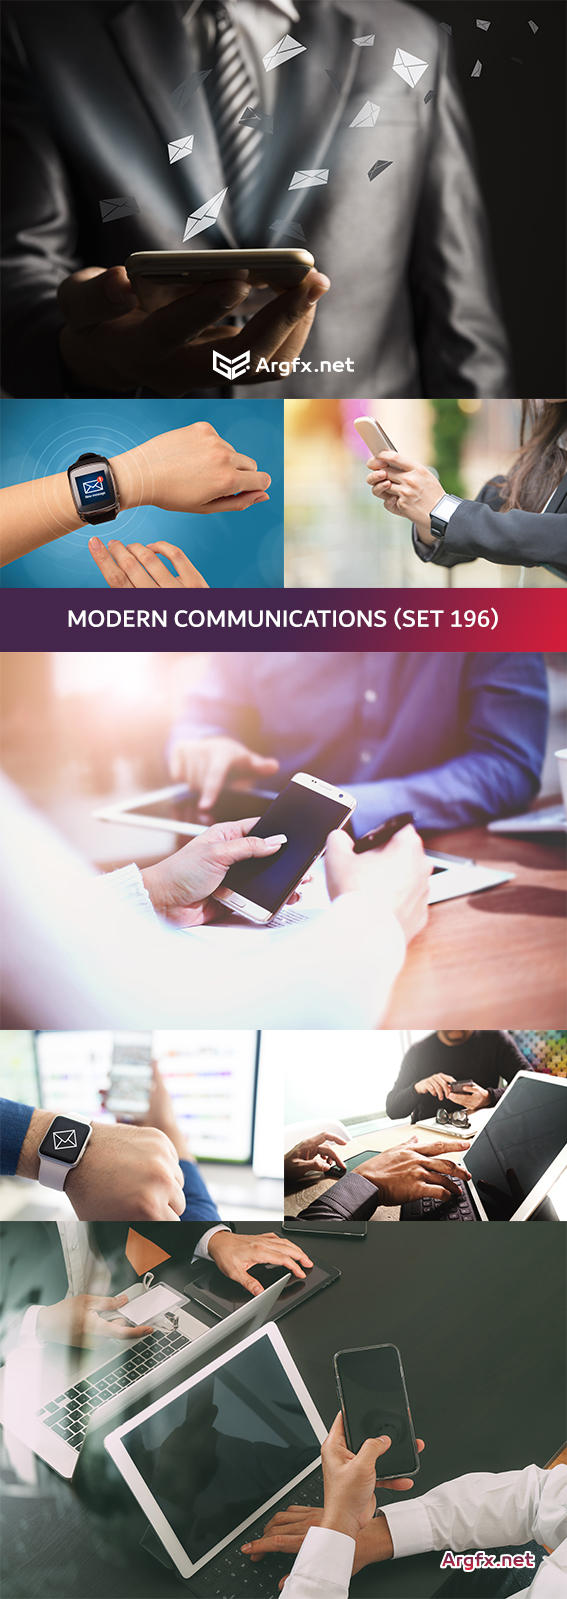 Photos - Modern Communications (Set 196)